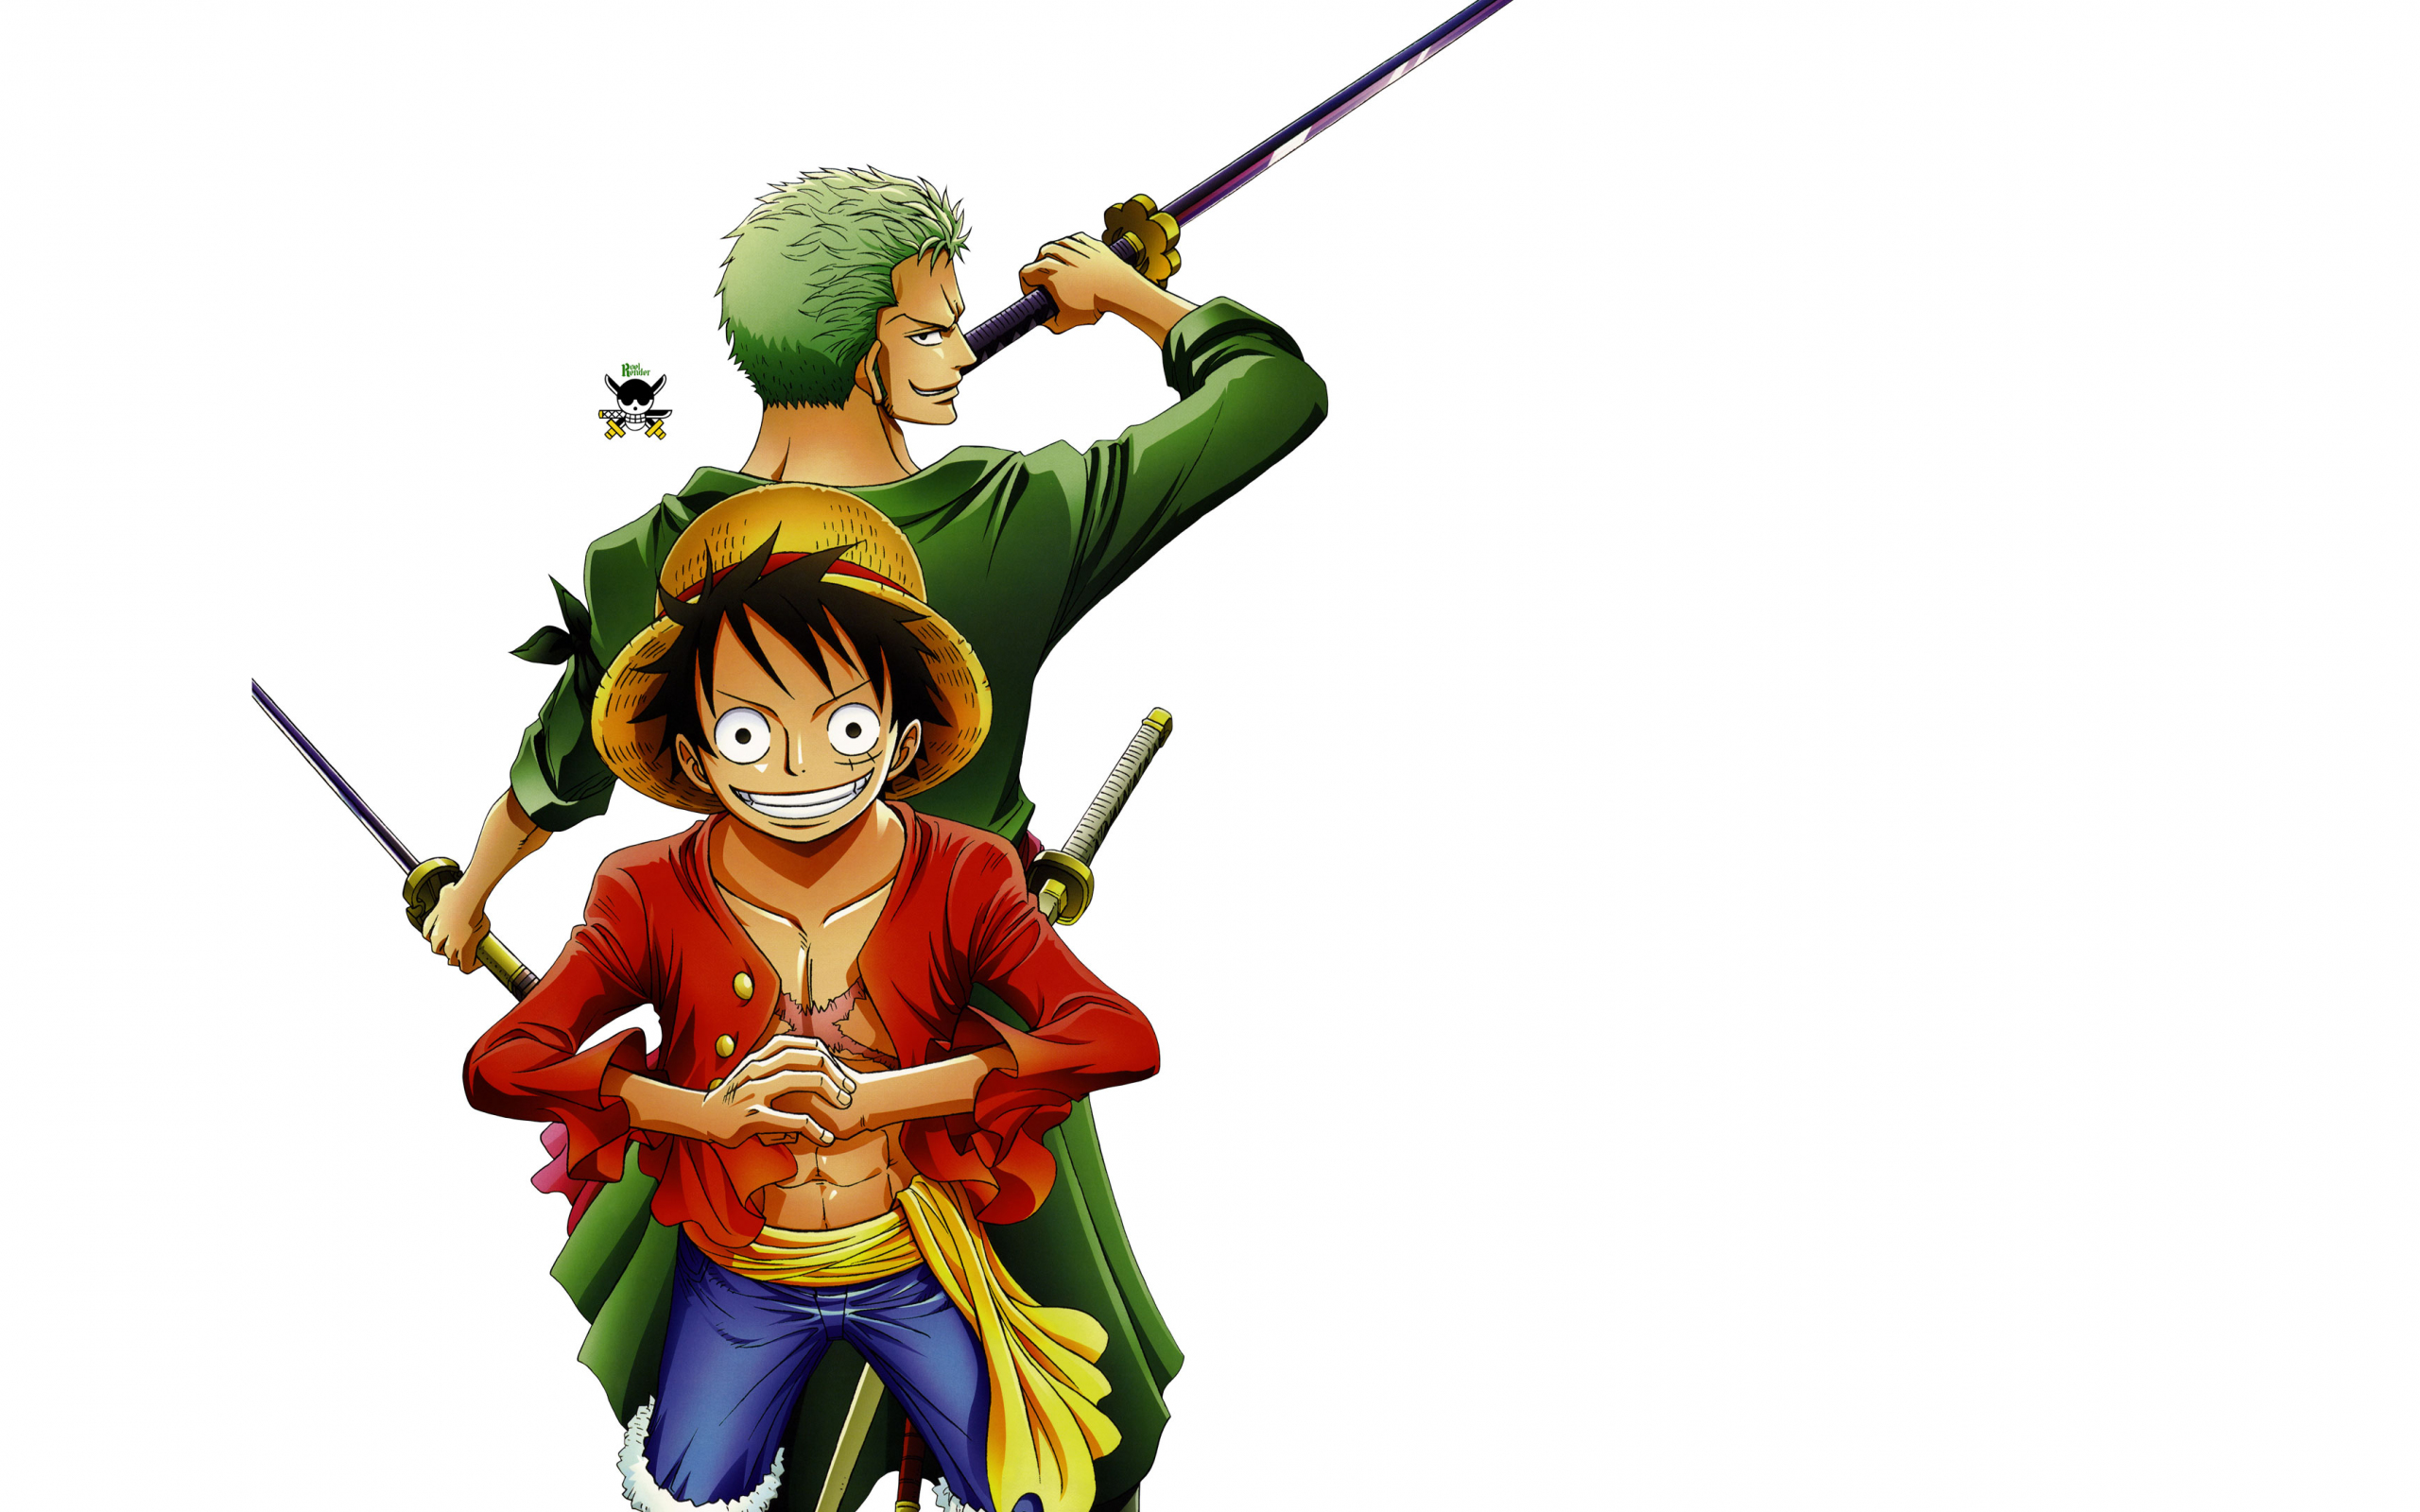 Download 2560x1600 Wallpaper Roronoa Zoro, Monkey D. Luffy, One Piece,  Anime Boy, Dual Wide, Widescreen 16:10, Widescreen, 2560x1600 Hd Image,  Background, 21721